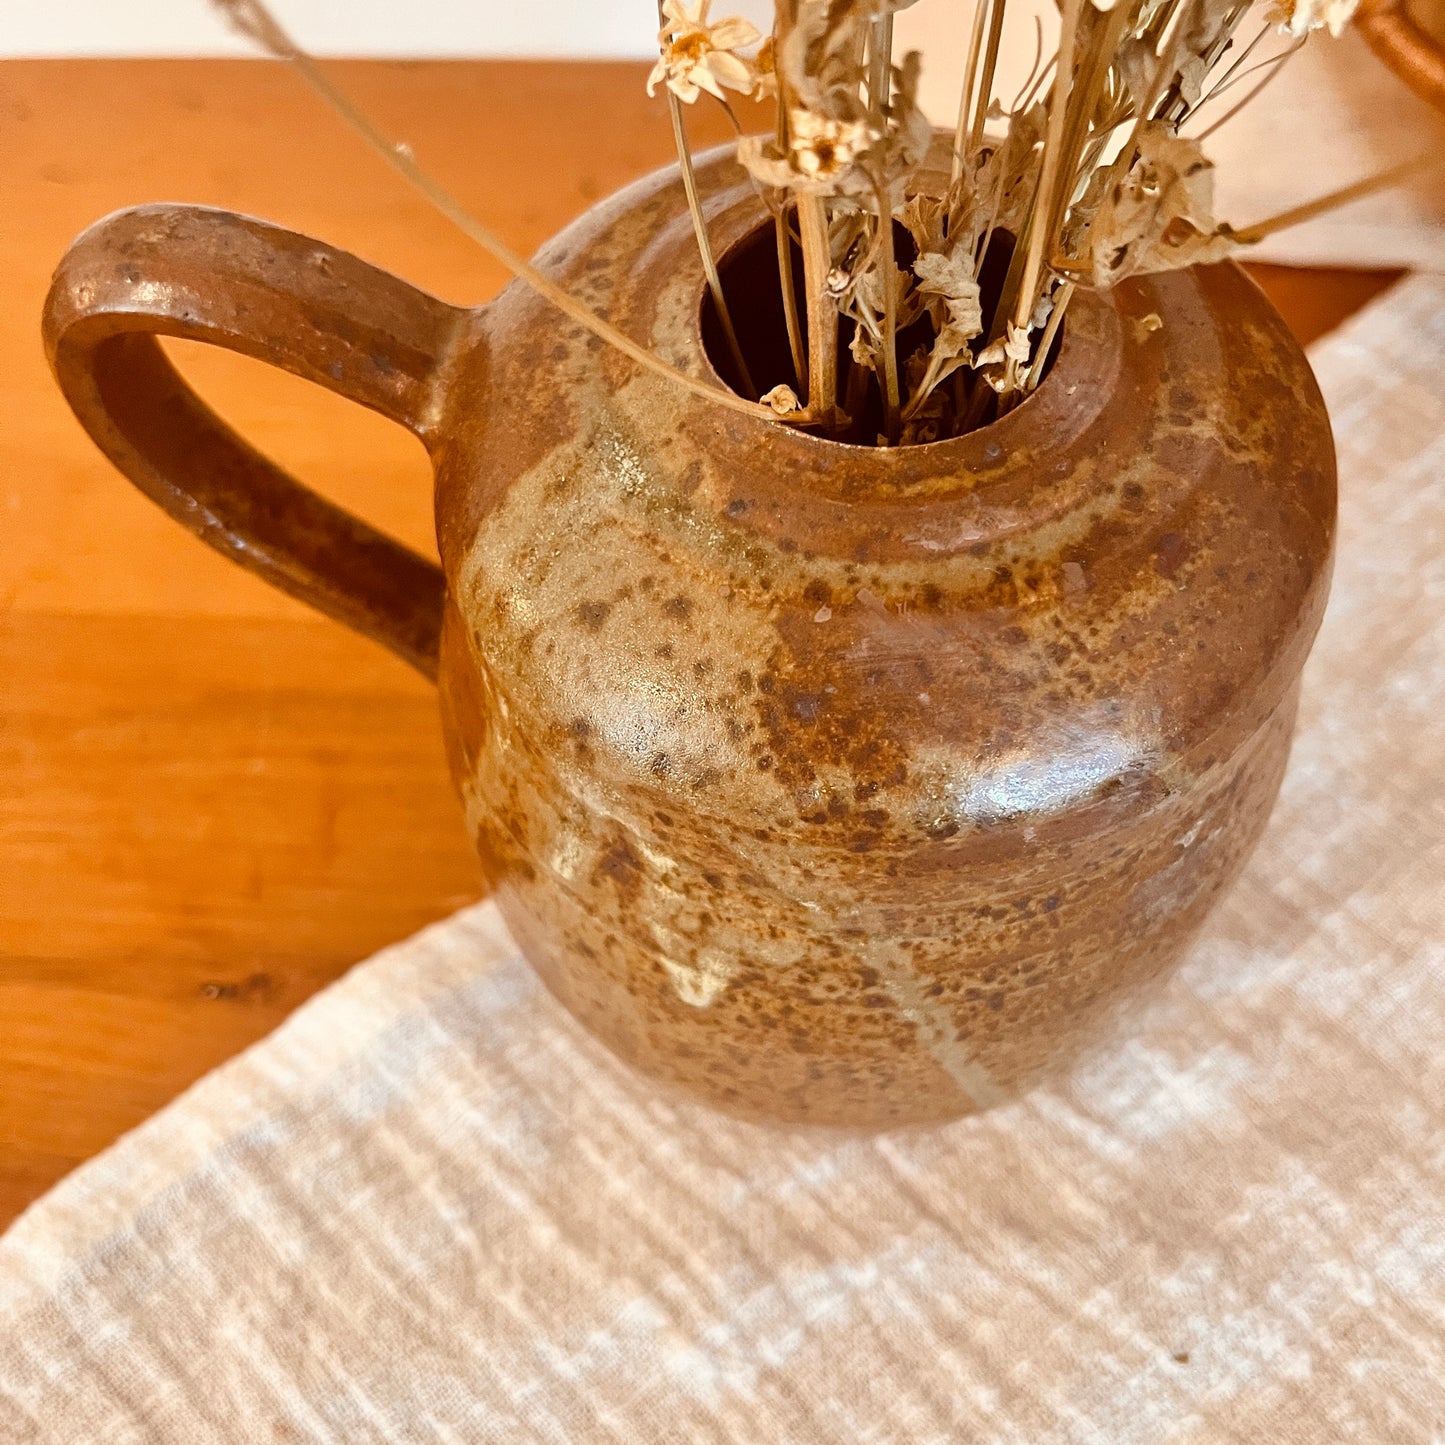 Stoneware vase with handle